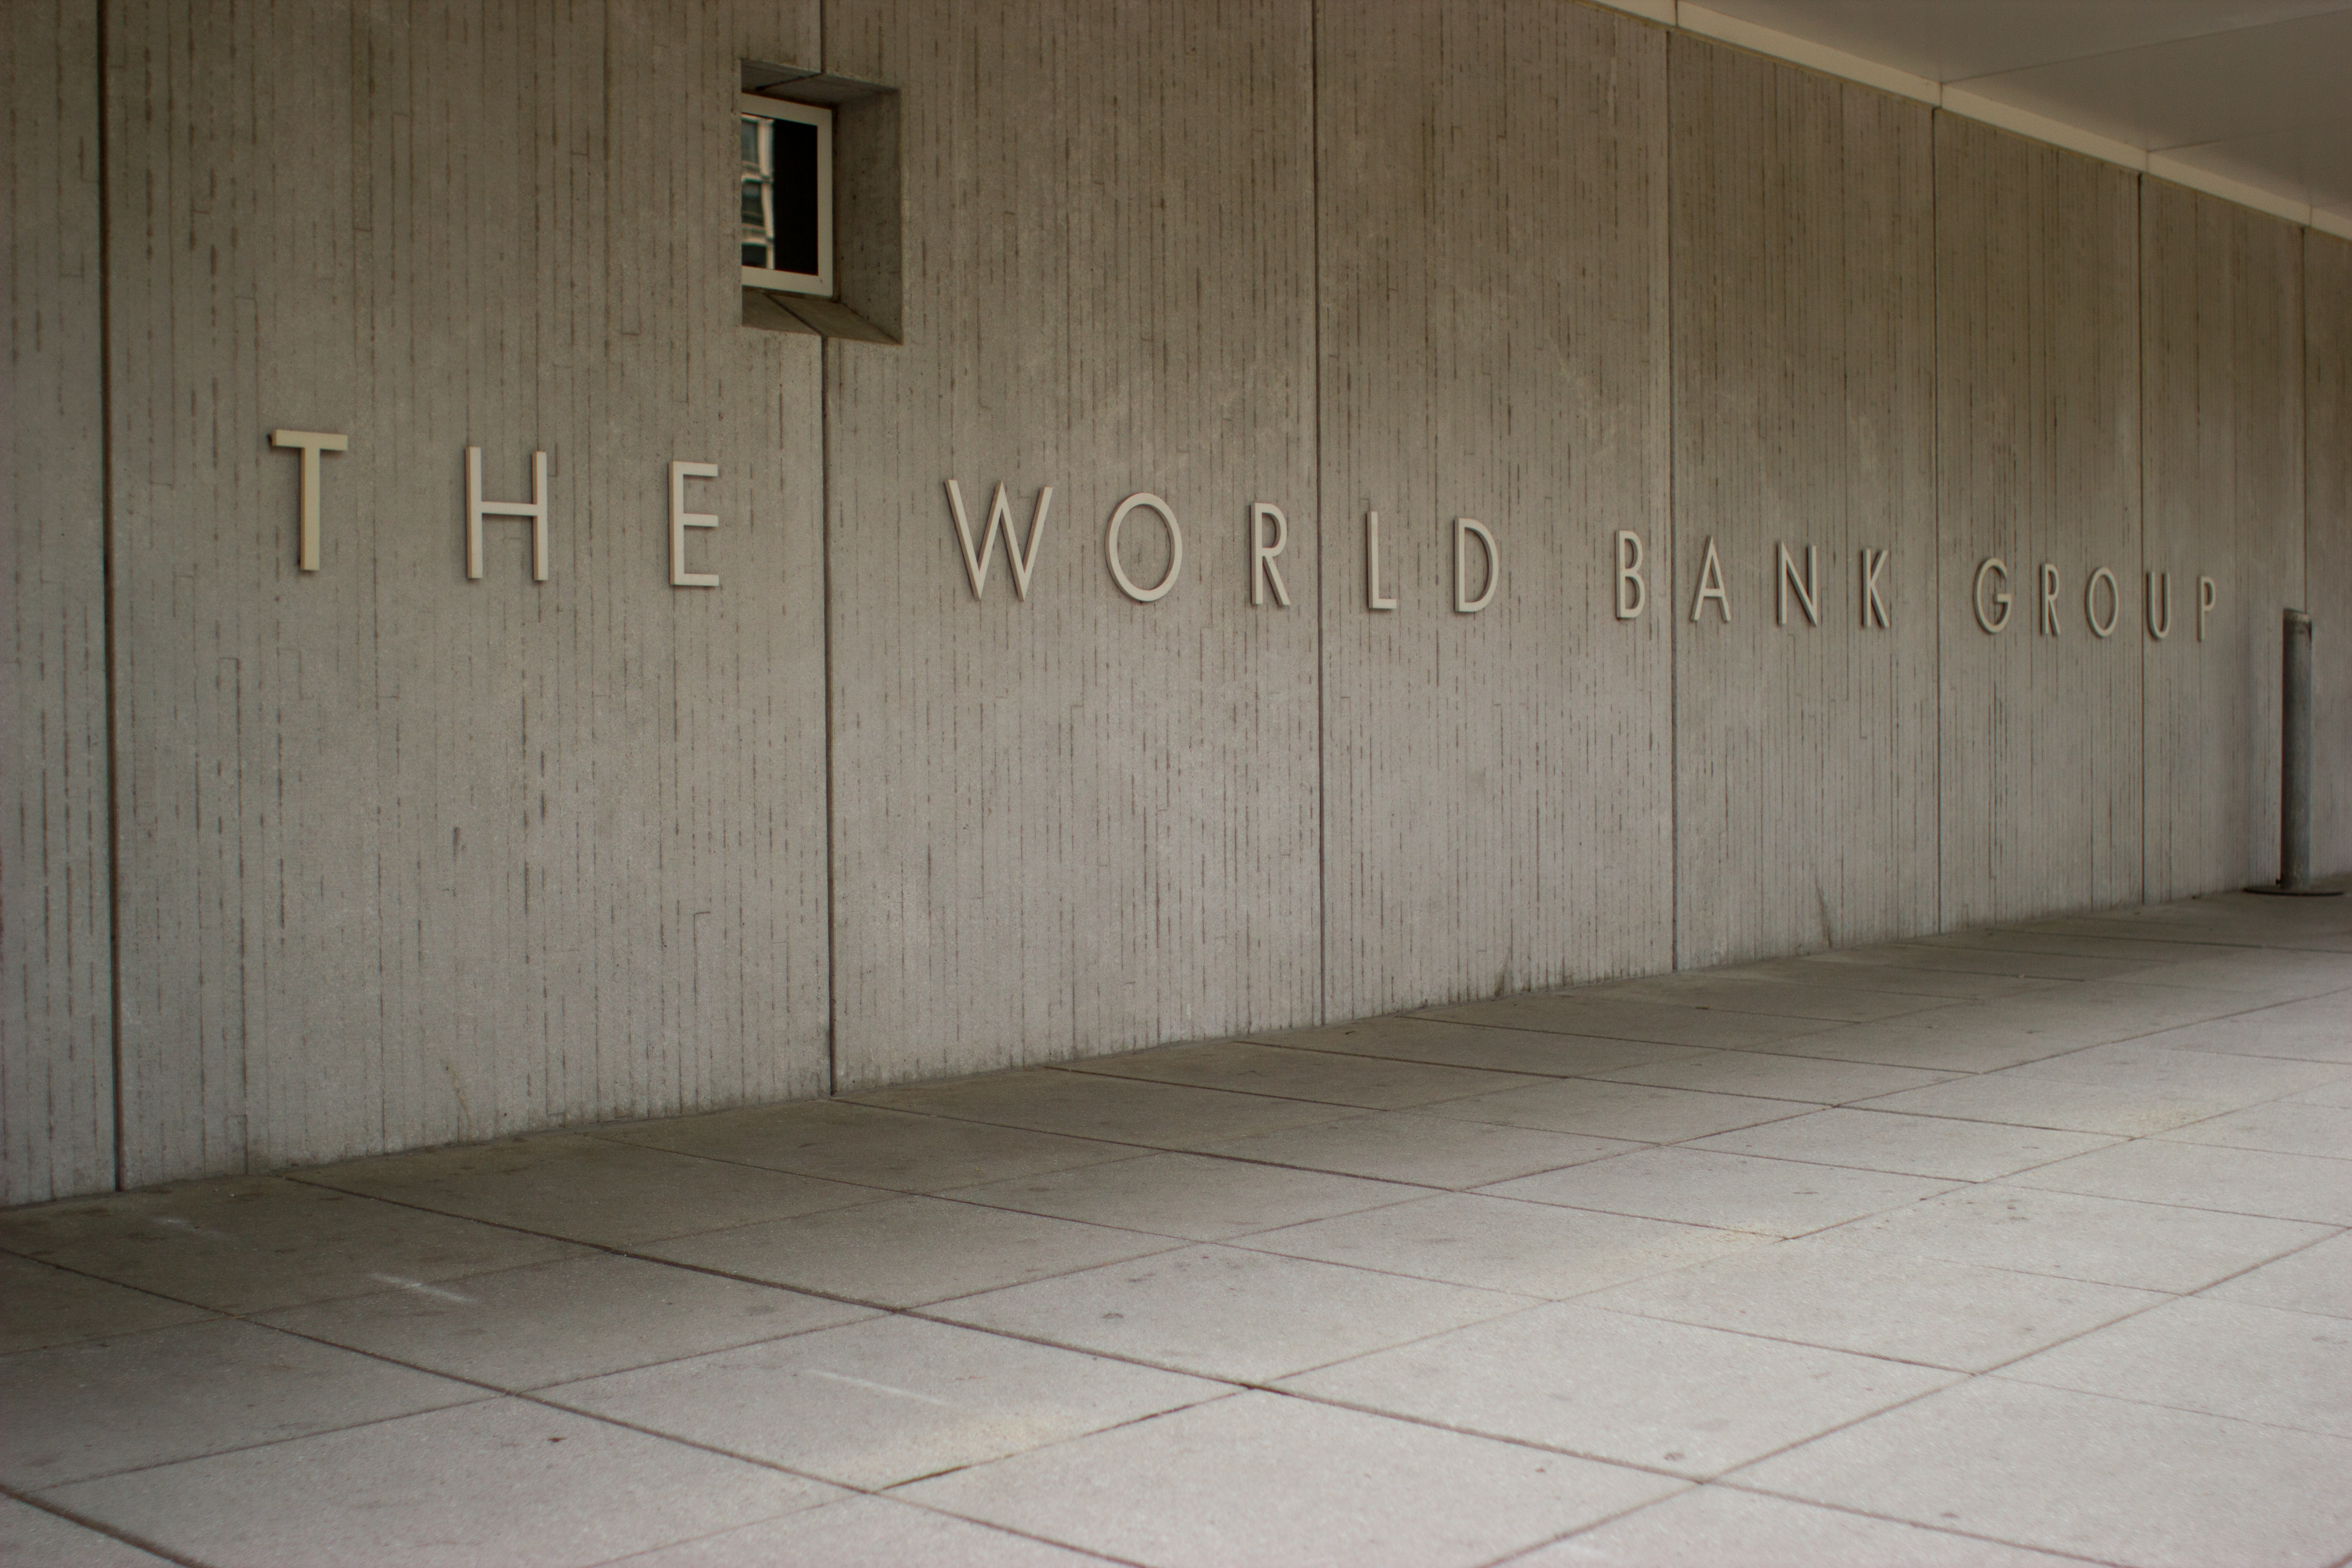 Facade of the World Bank Group building